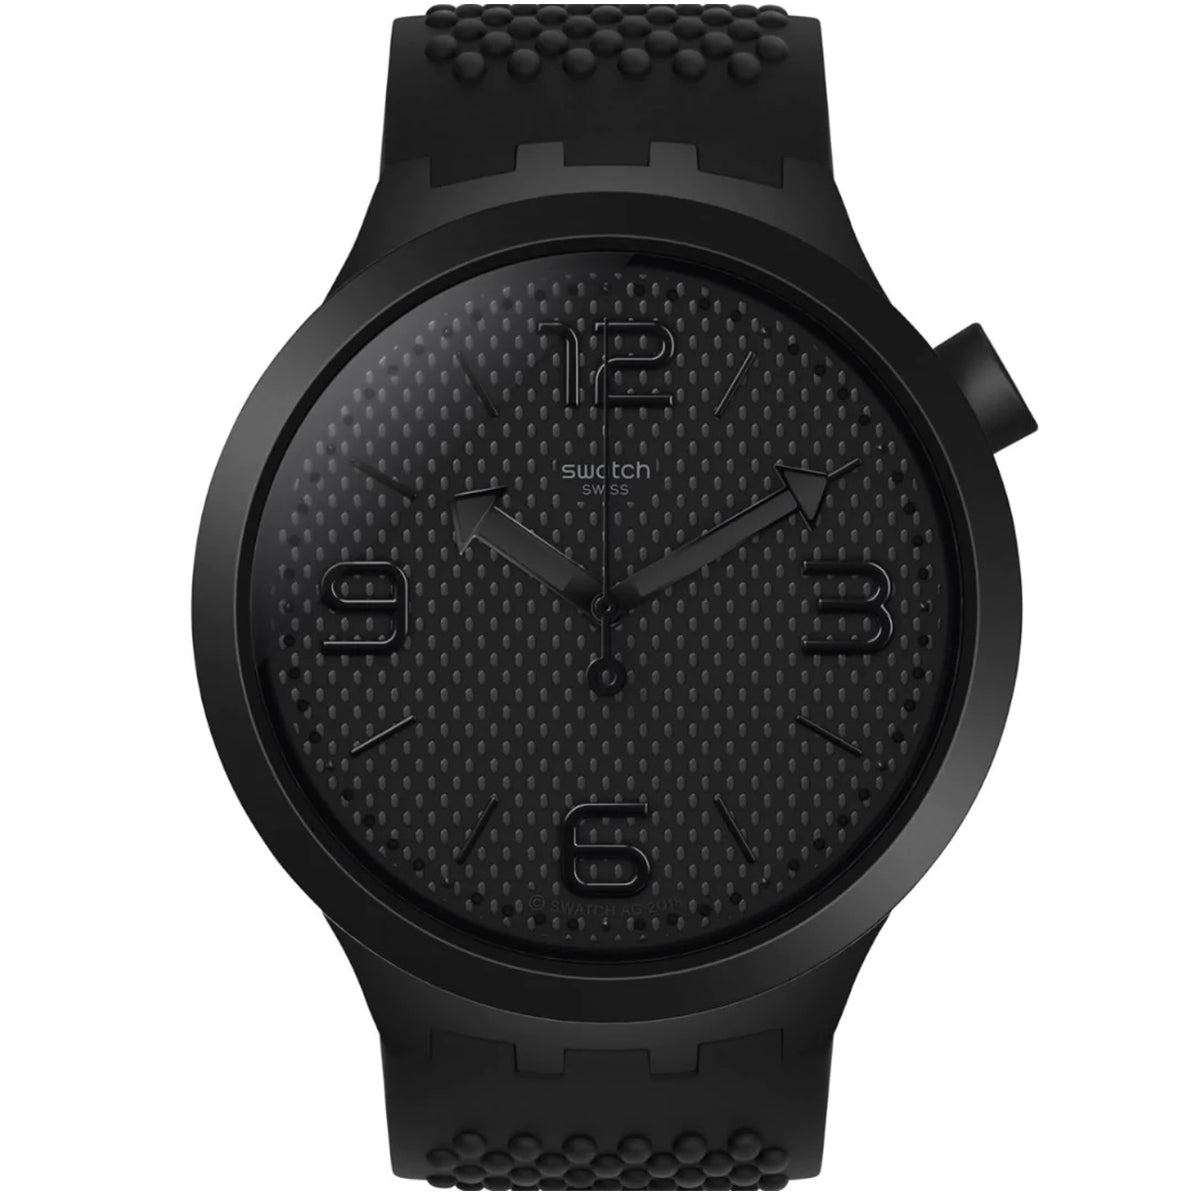 Men's Watches - egywatch.com